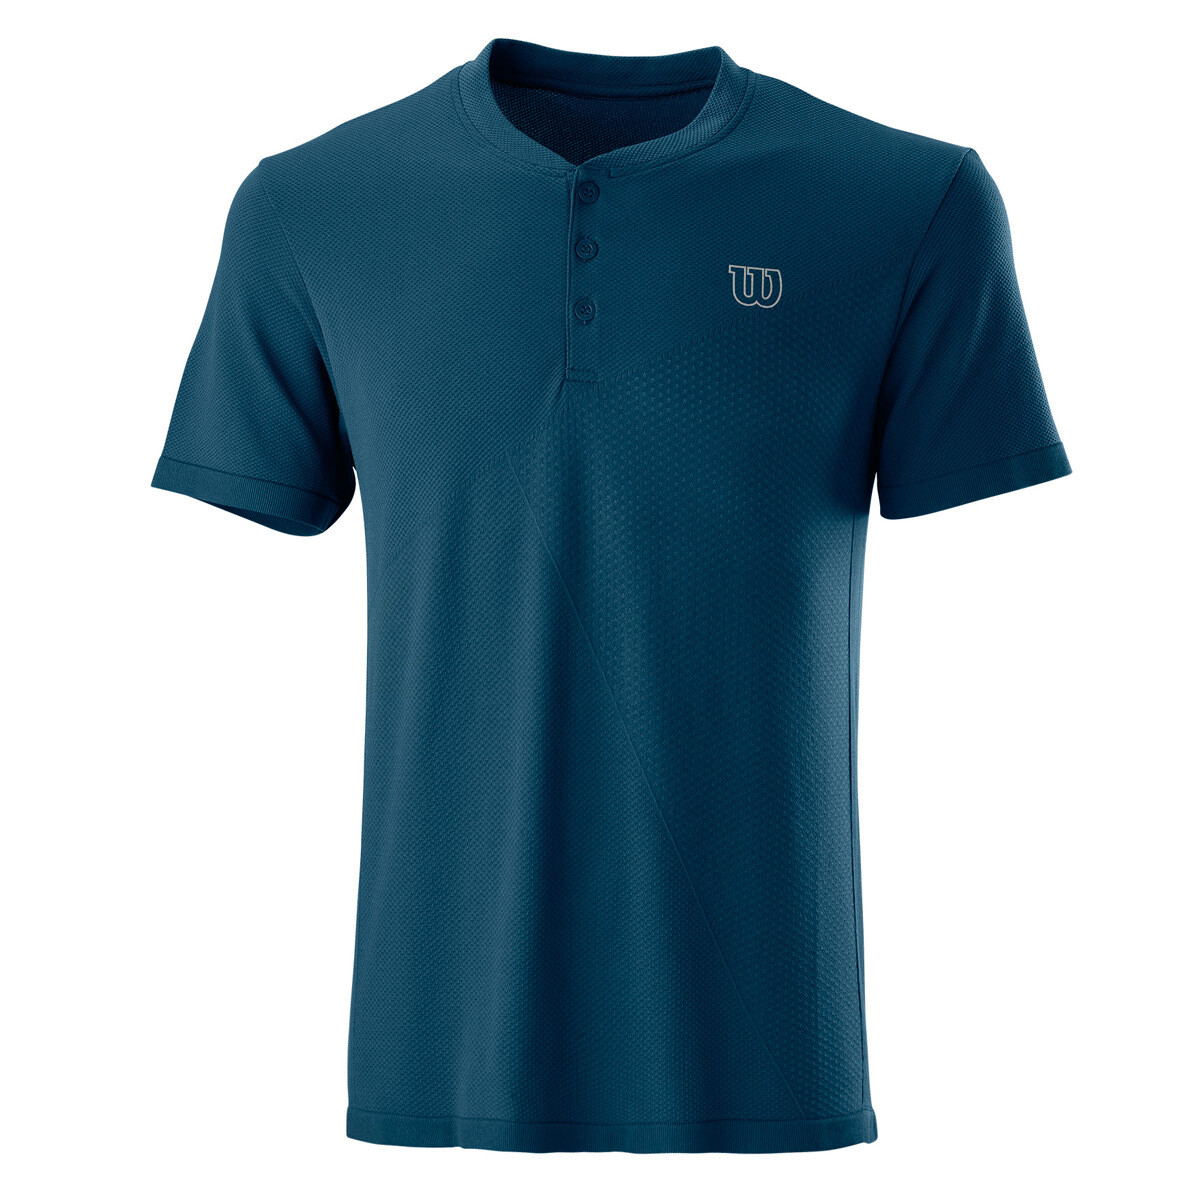 Wilson Mens Power Henley Tee Shirt - Majolica Blue, Size: M